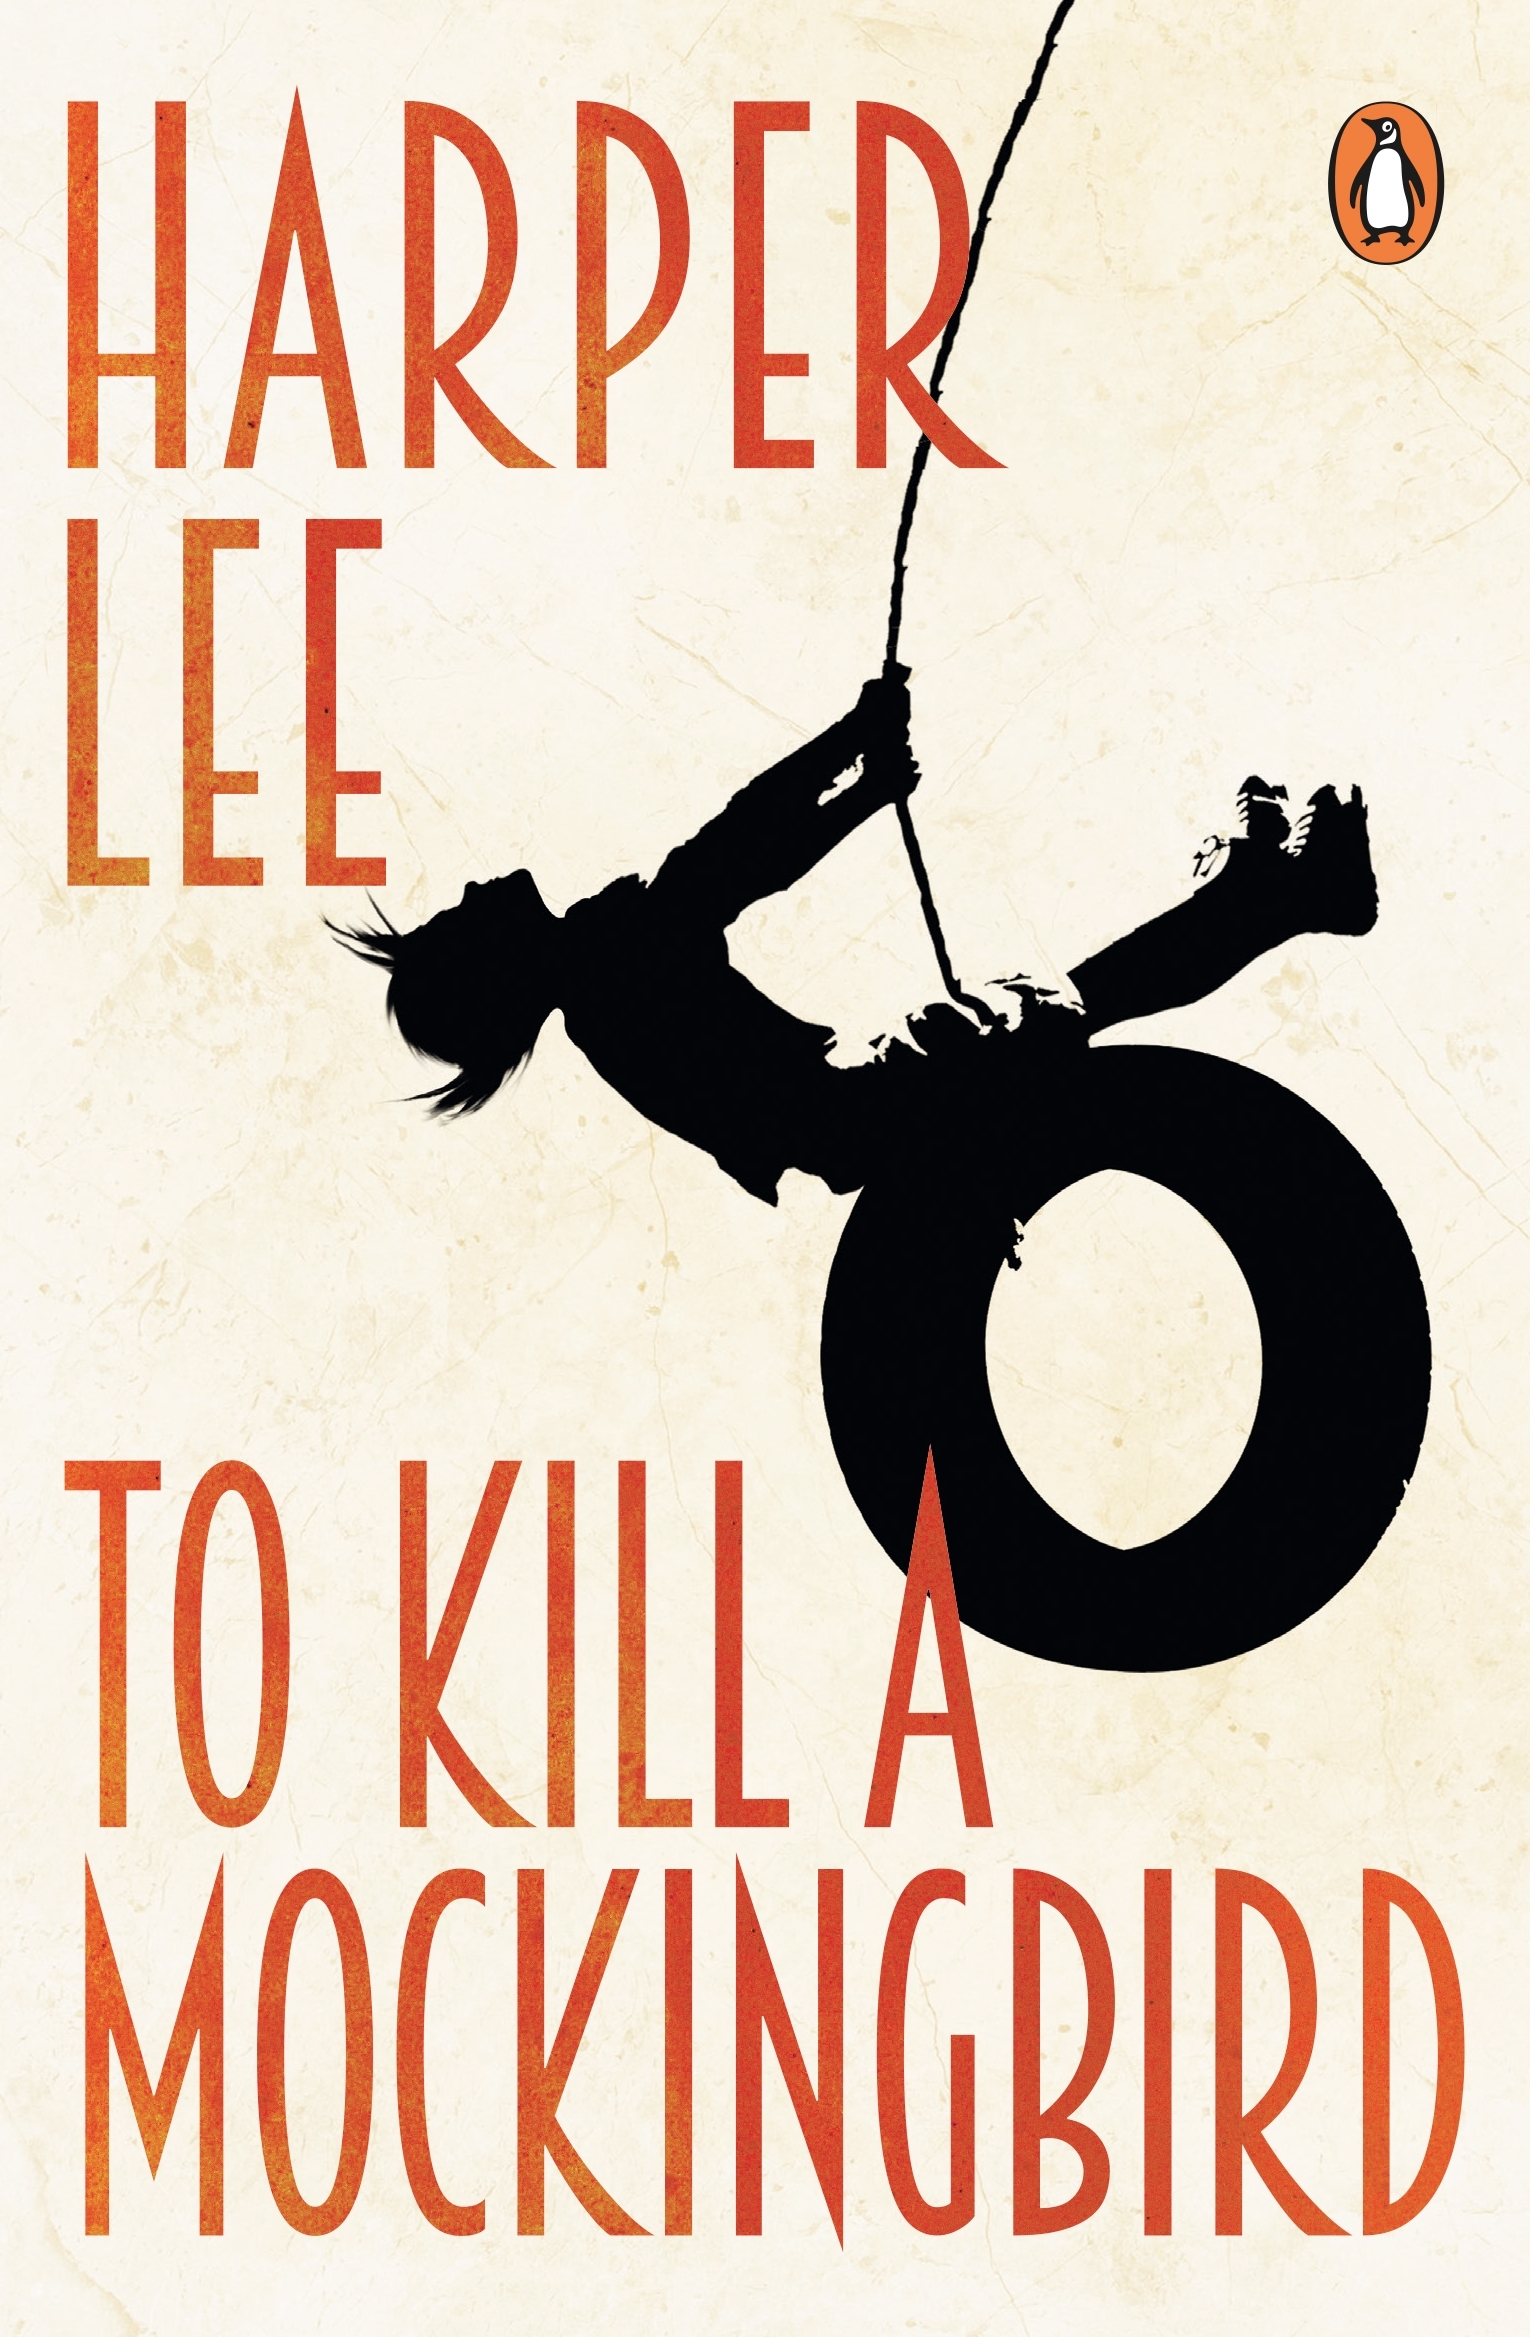 biography of harper lee to kill a mockingbird